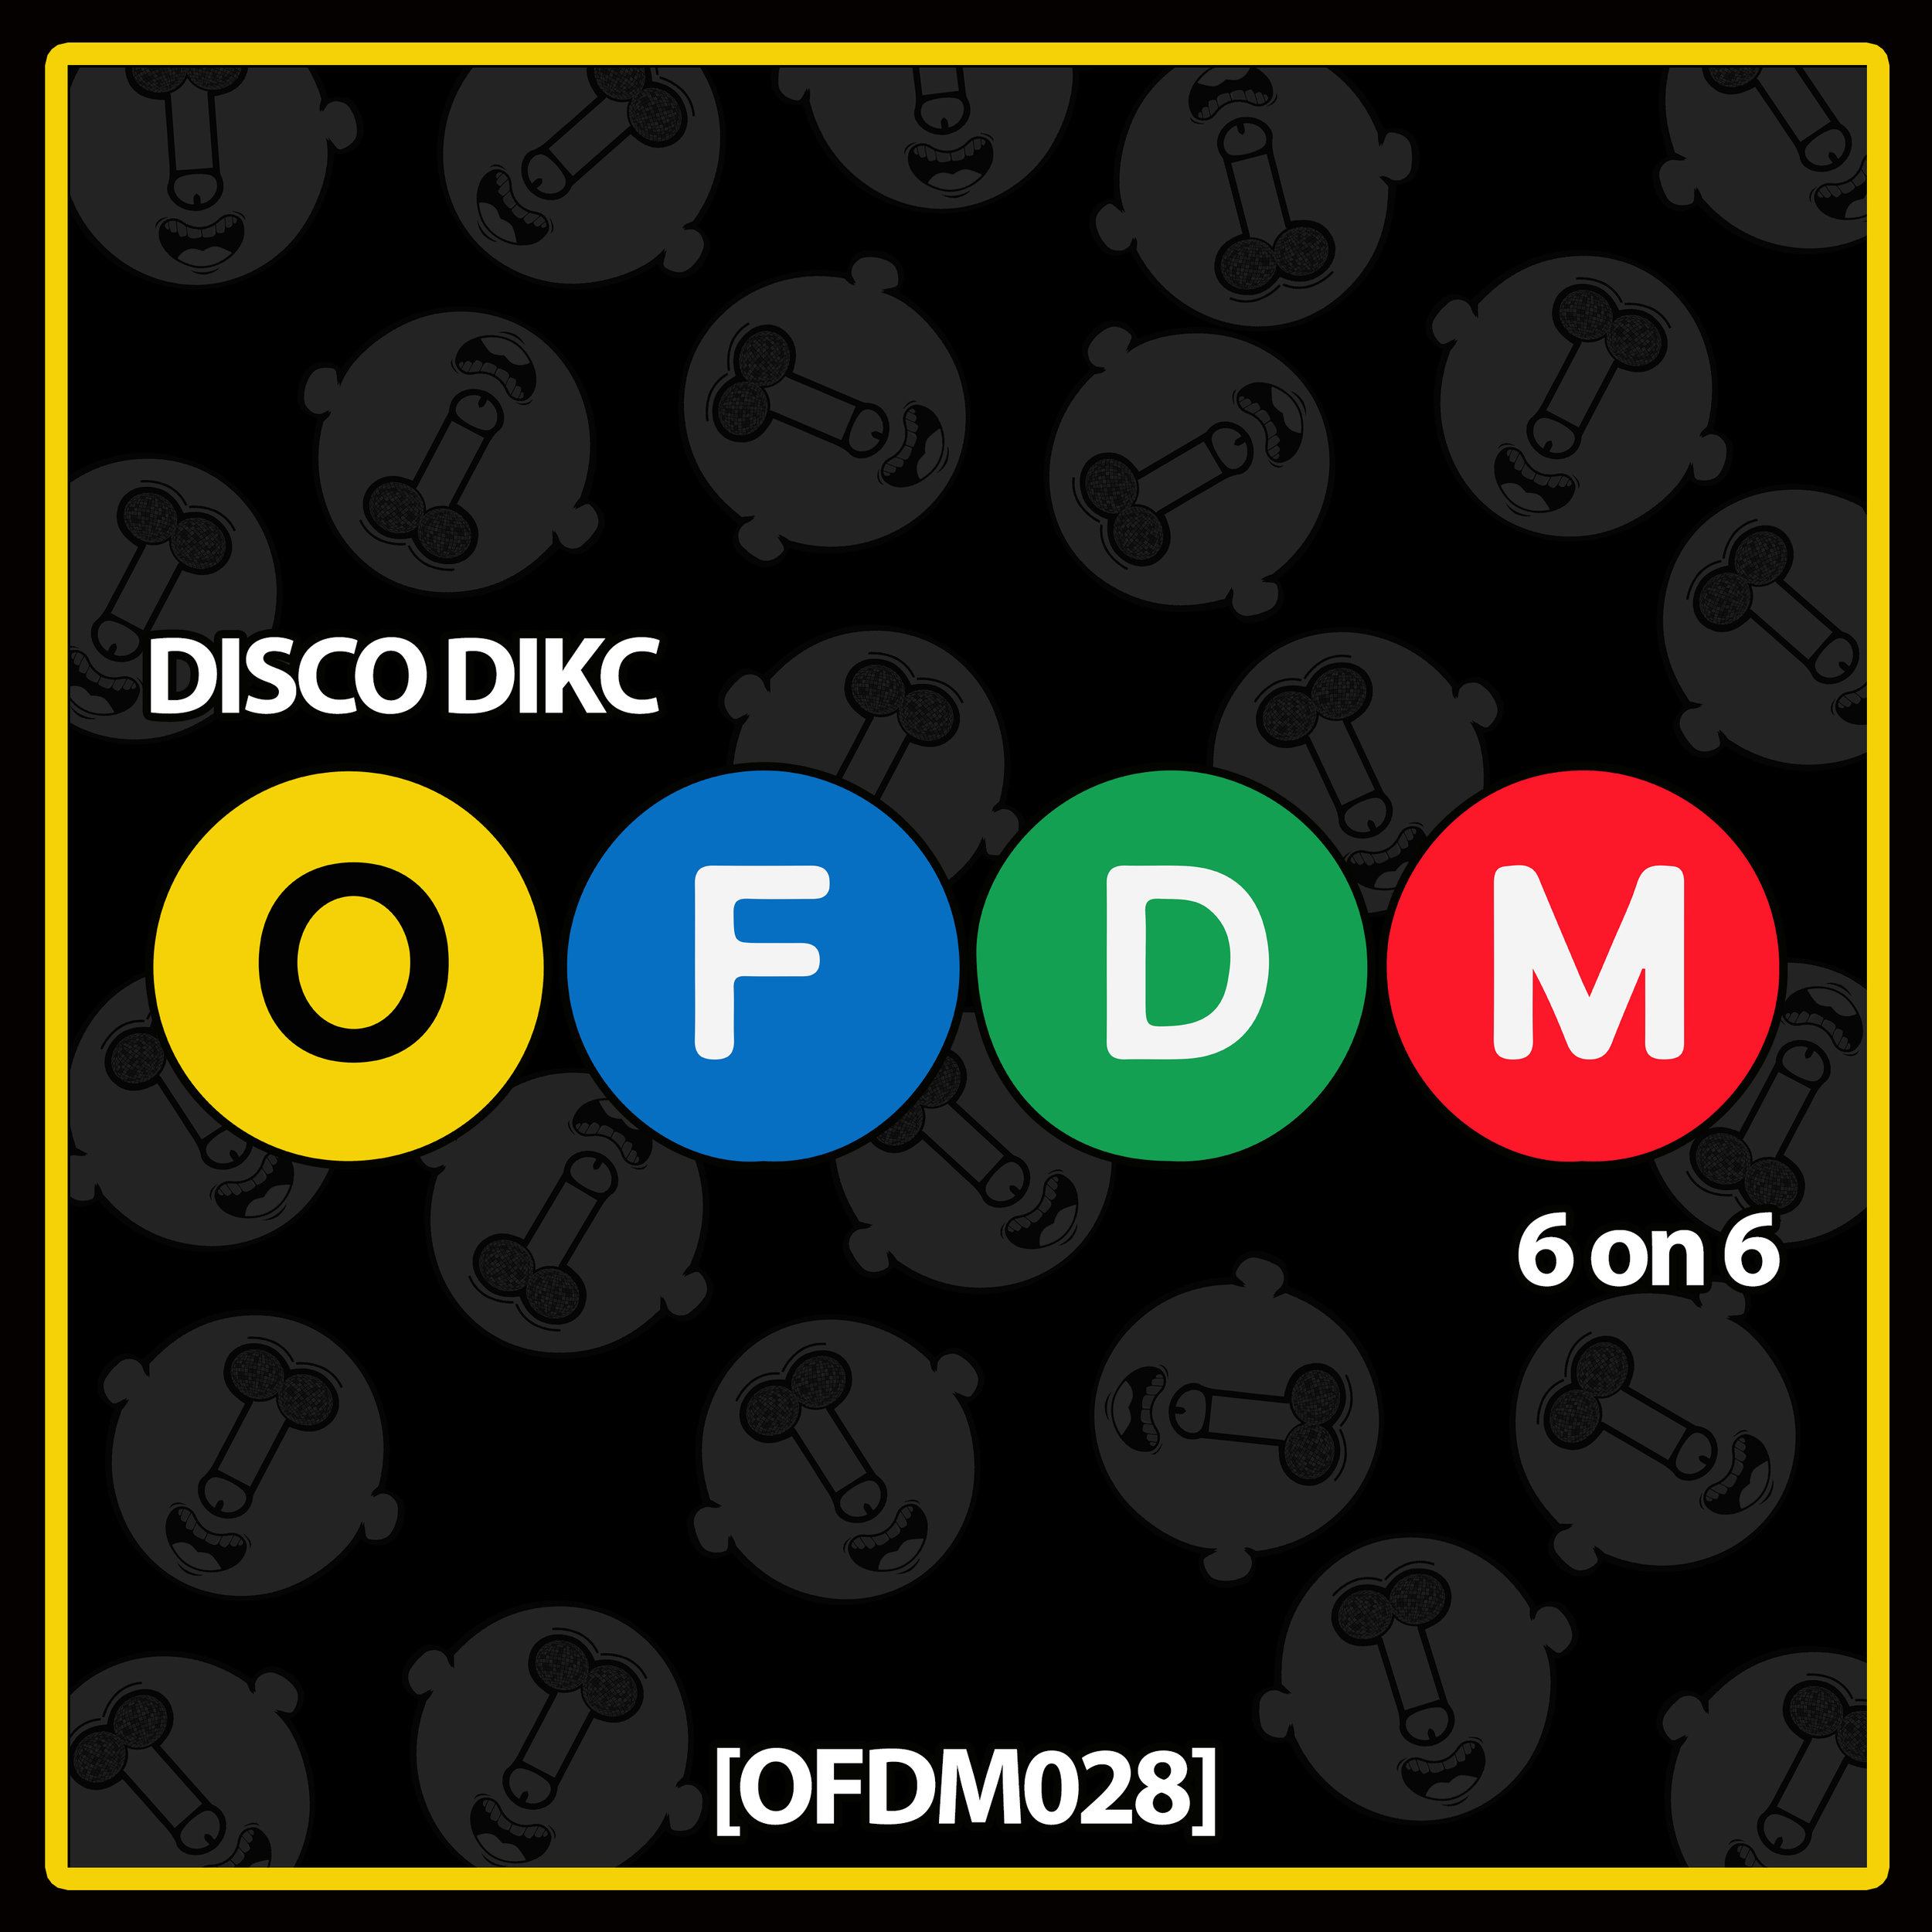 [OFDM028] - DISCO DIKC - 6 on 6.jpg